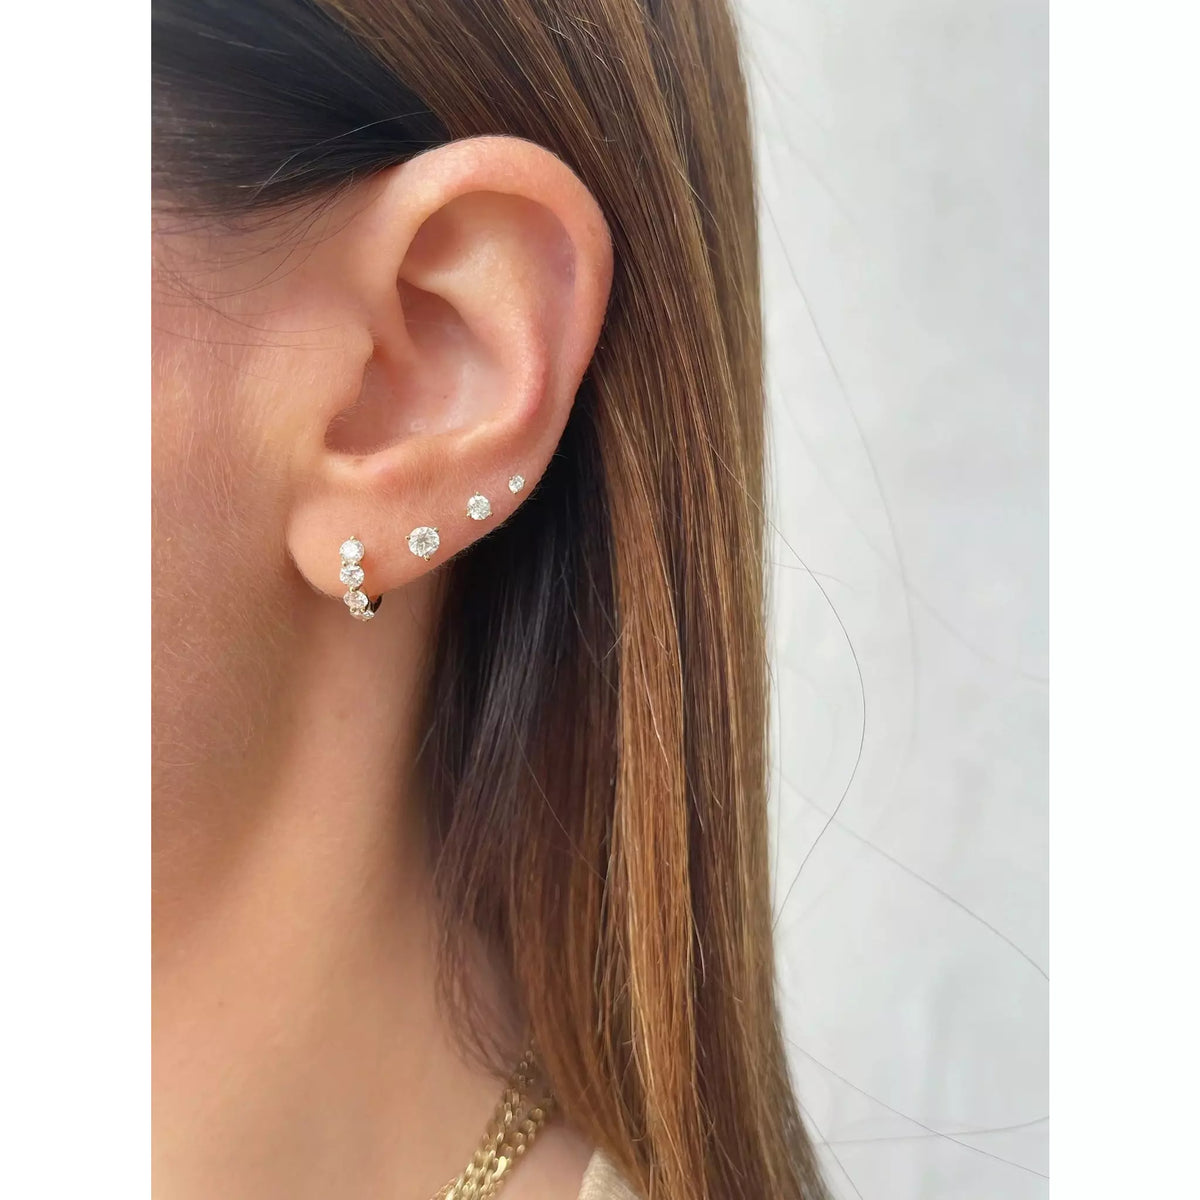 Jumbo Solitaire Diamond Stud Earring